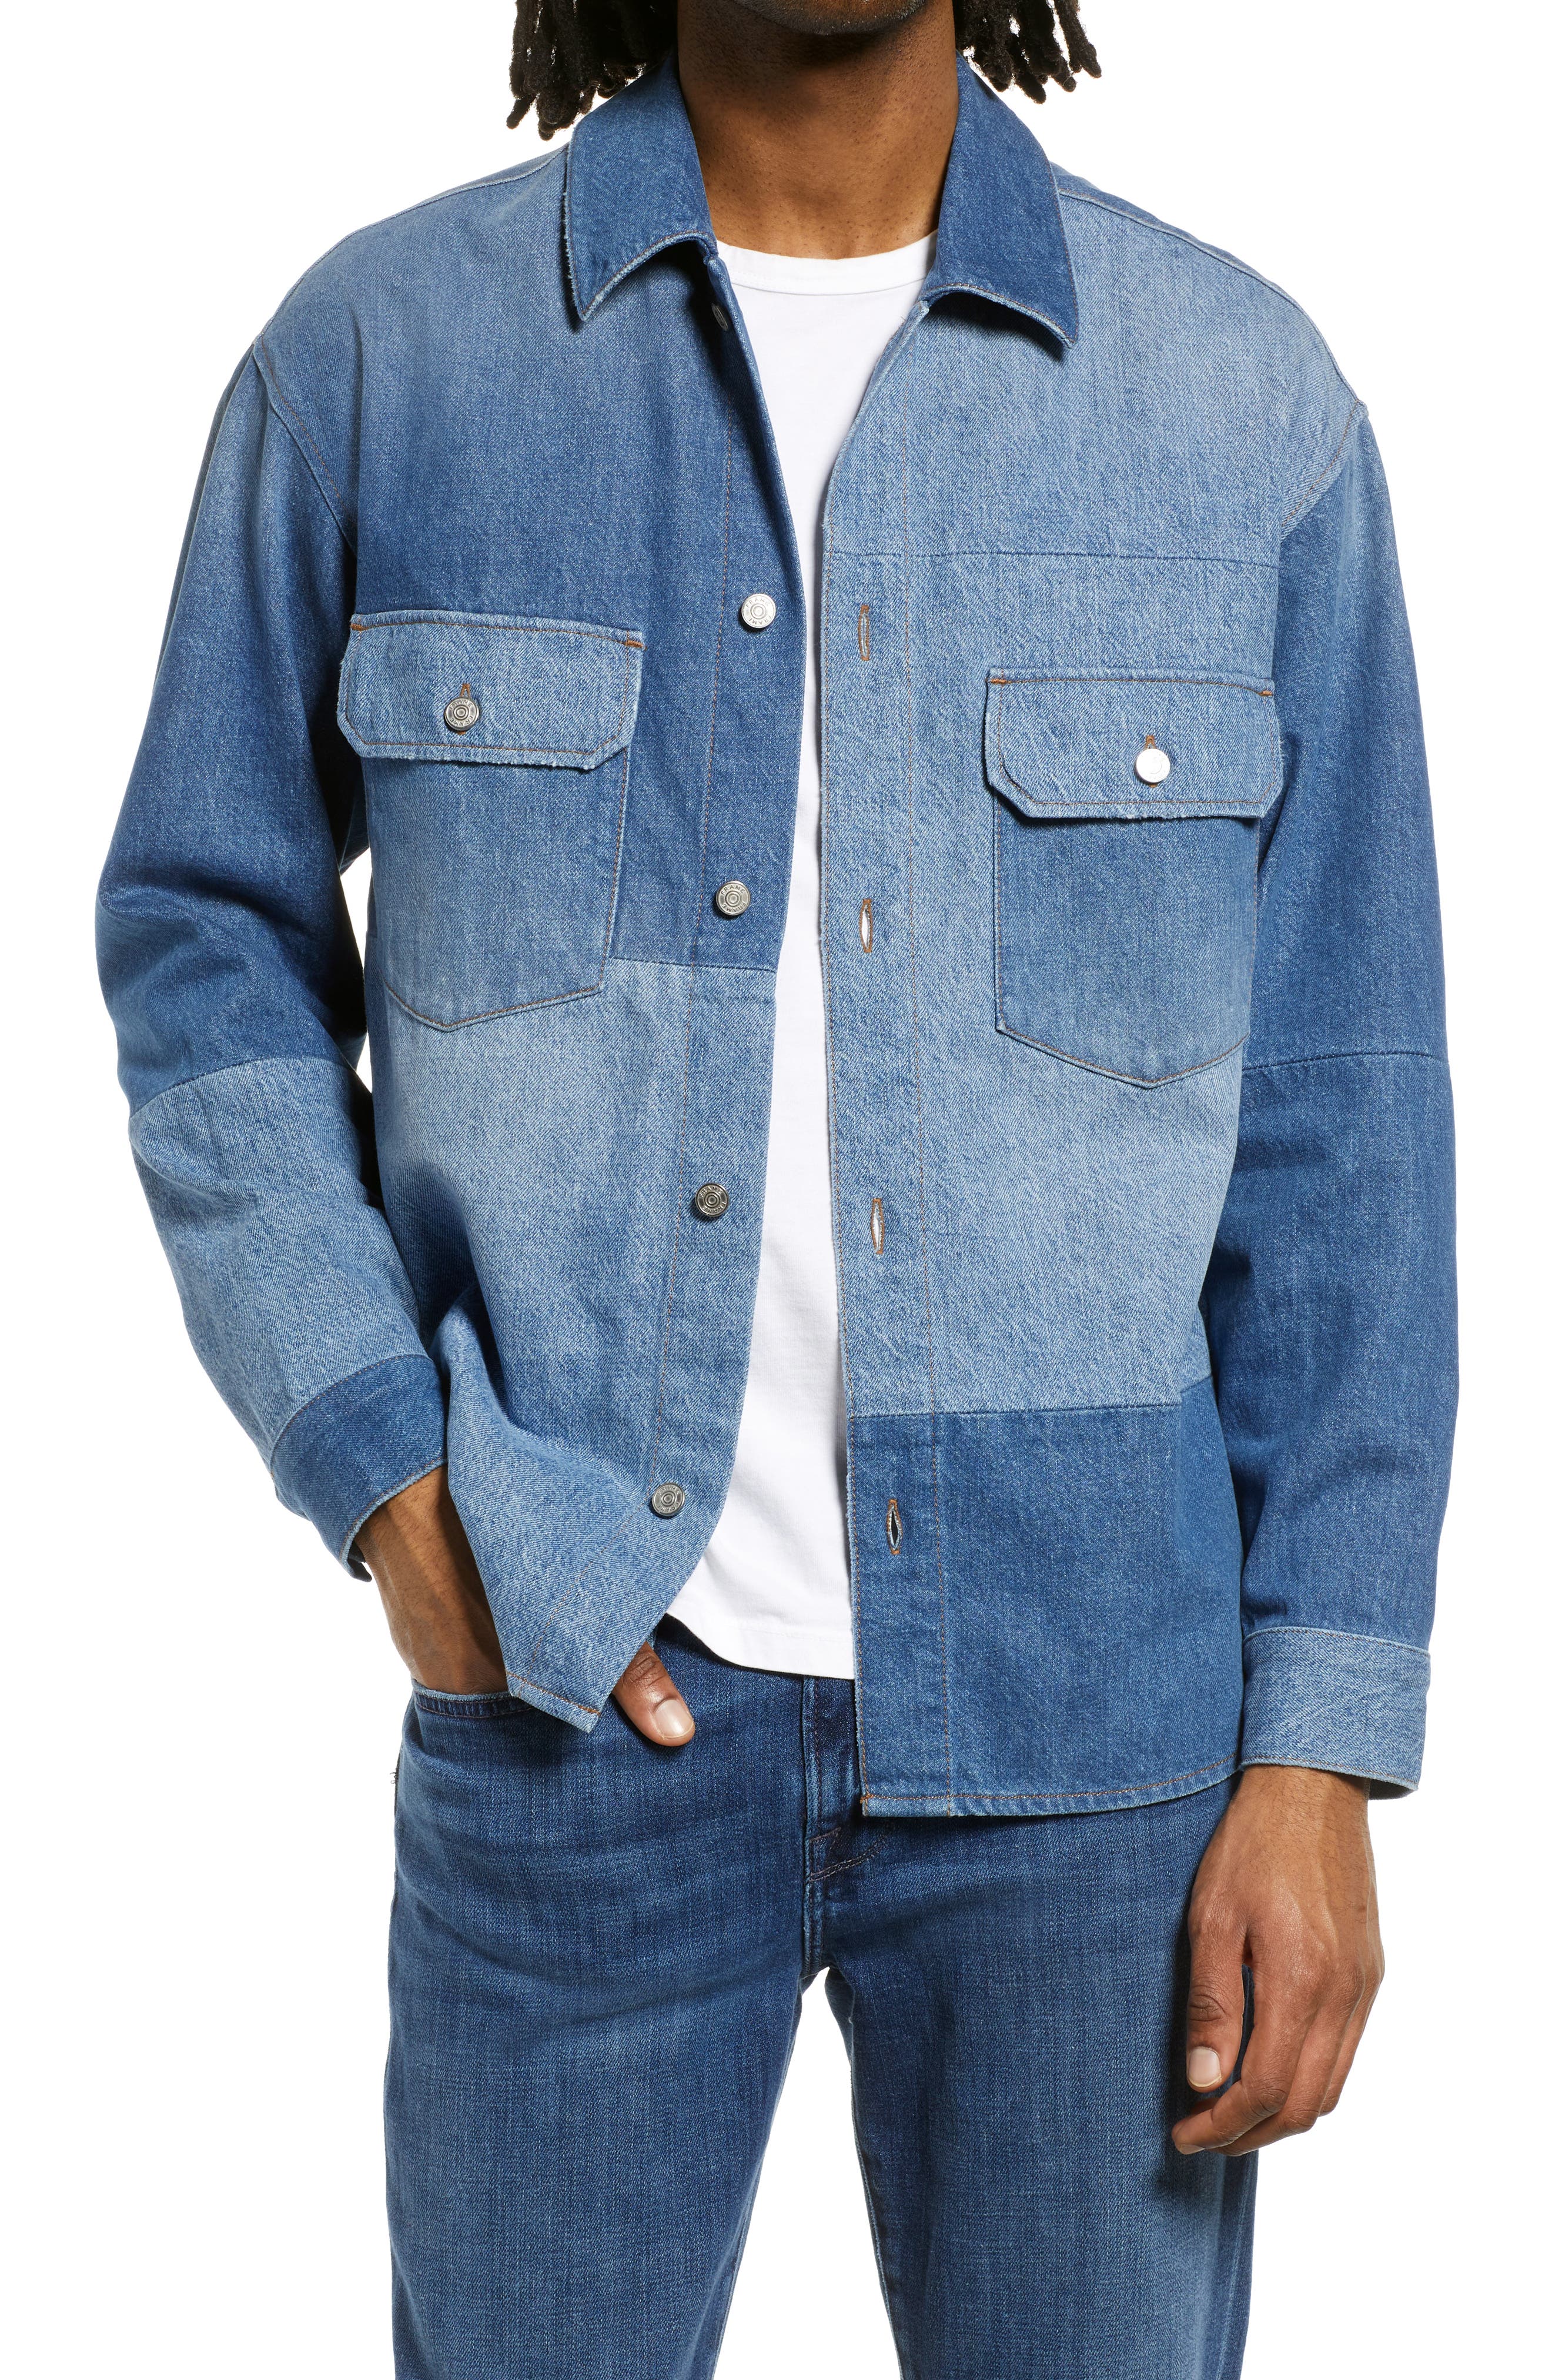 FRAME Colorblock Cotton Denim Shirt in Blue Washed at Nordstrom, Size Medium